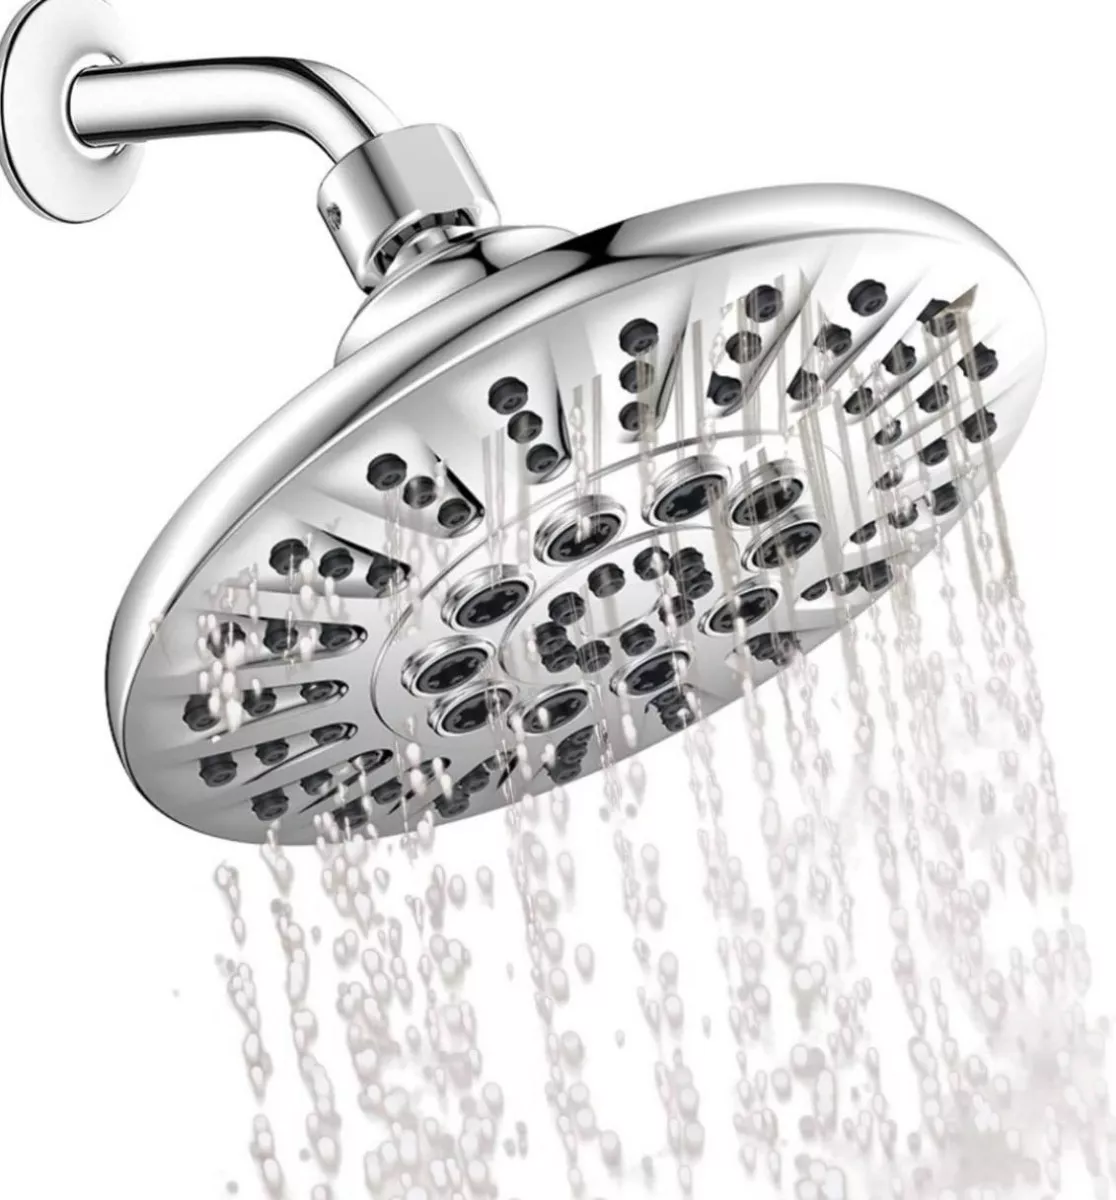 Primera imagen para búsqueda de cabezal de ducha